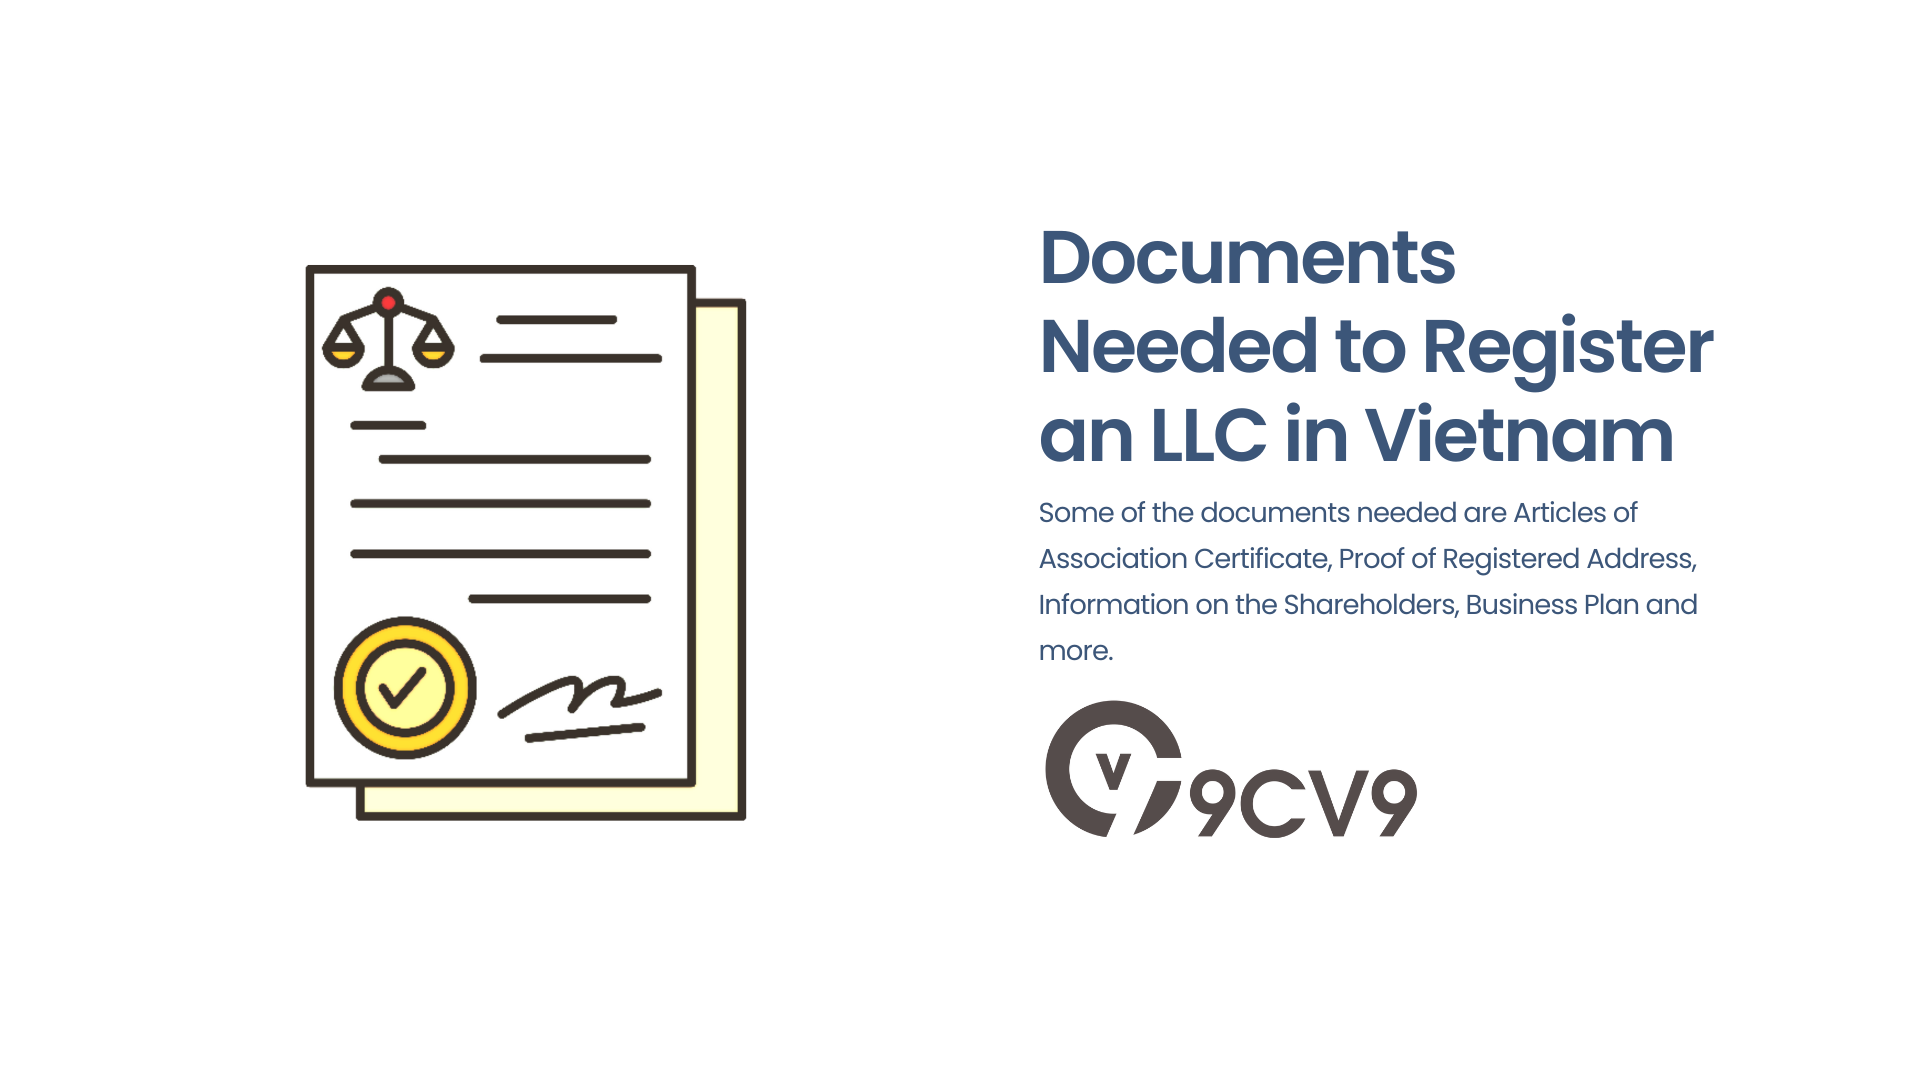 Documents Needed to Register an LLC in Vietnam